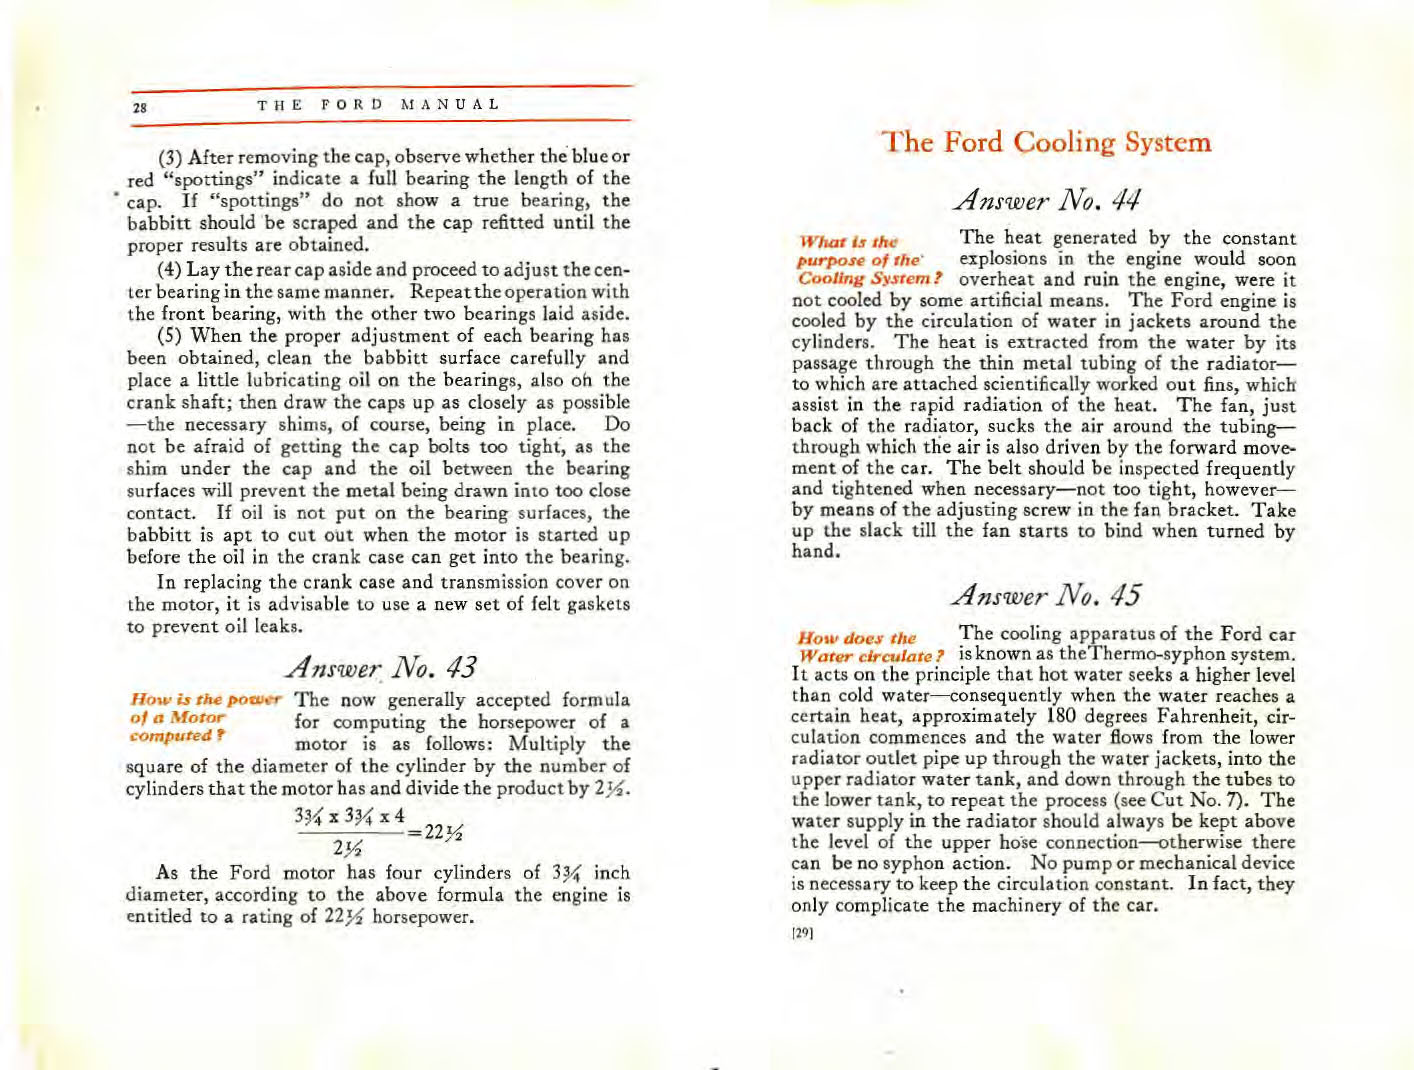 n_1915 Ford Owners Manual-28-29.jpg